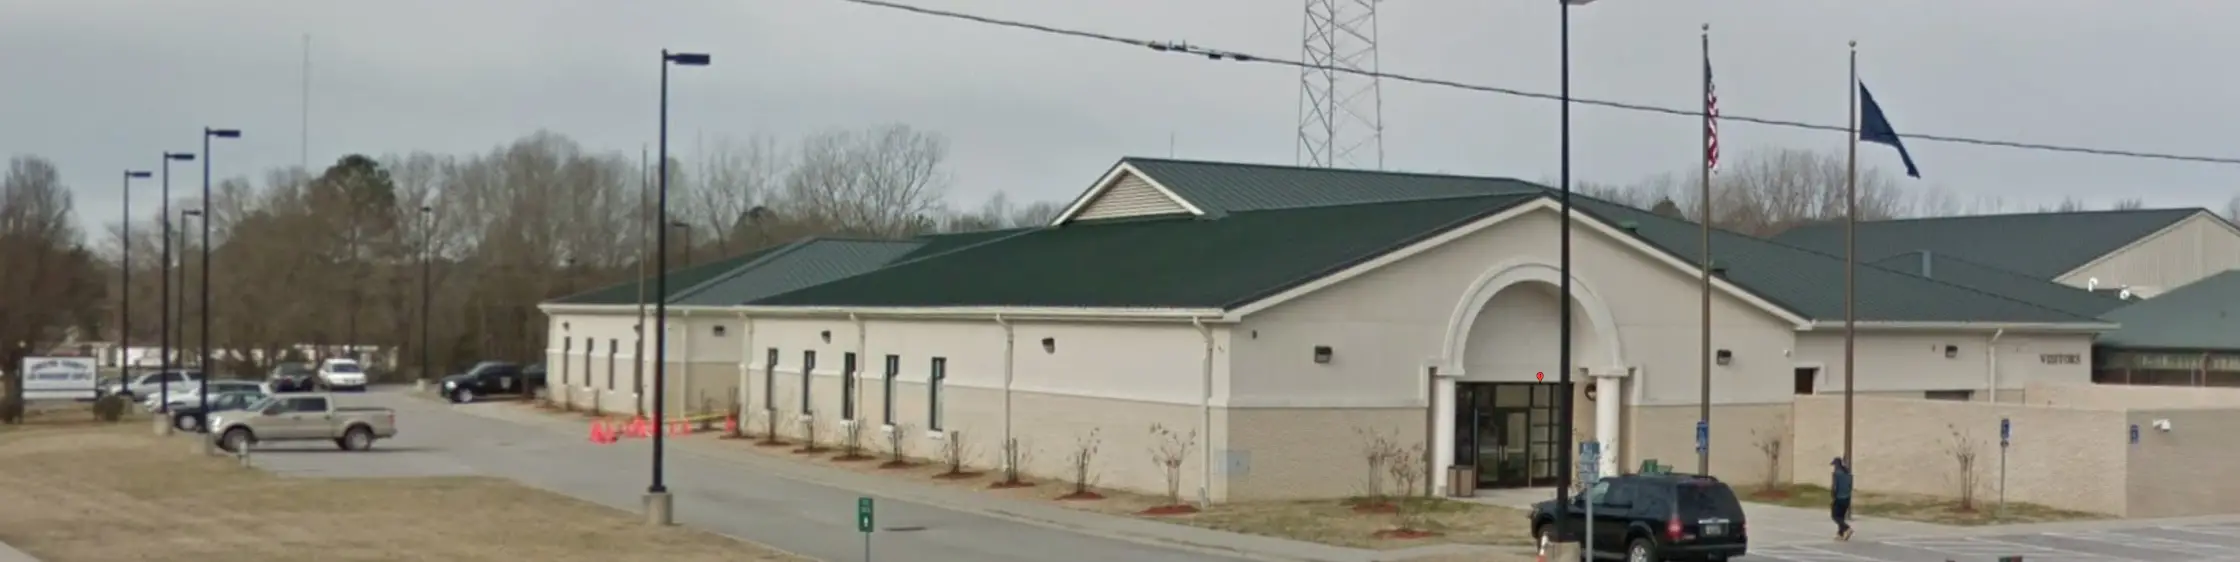 Chester County Detention Center